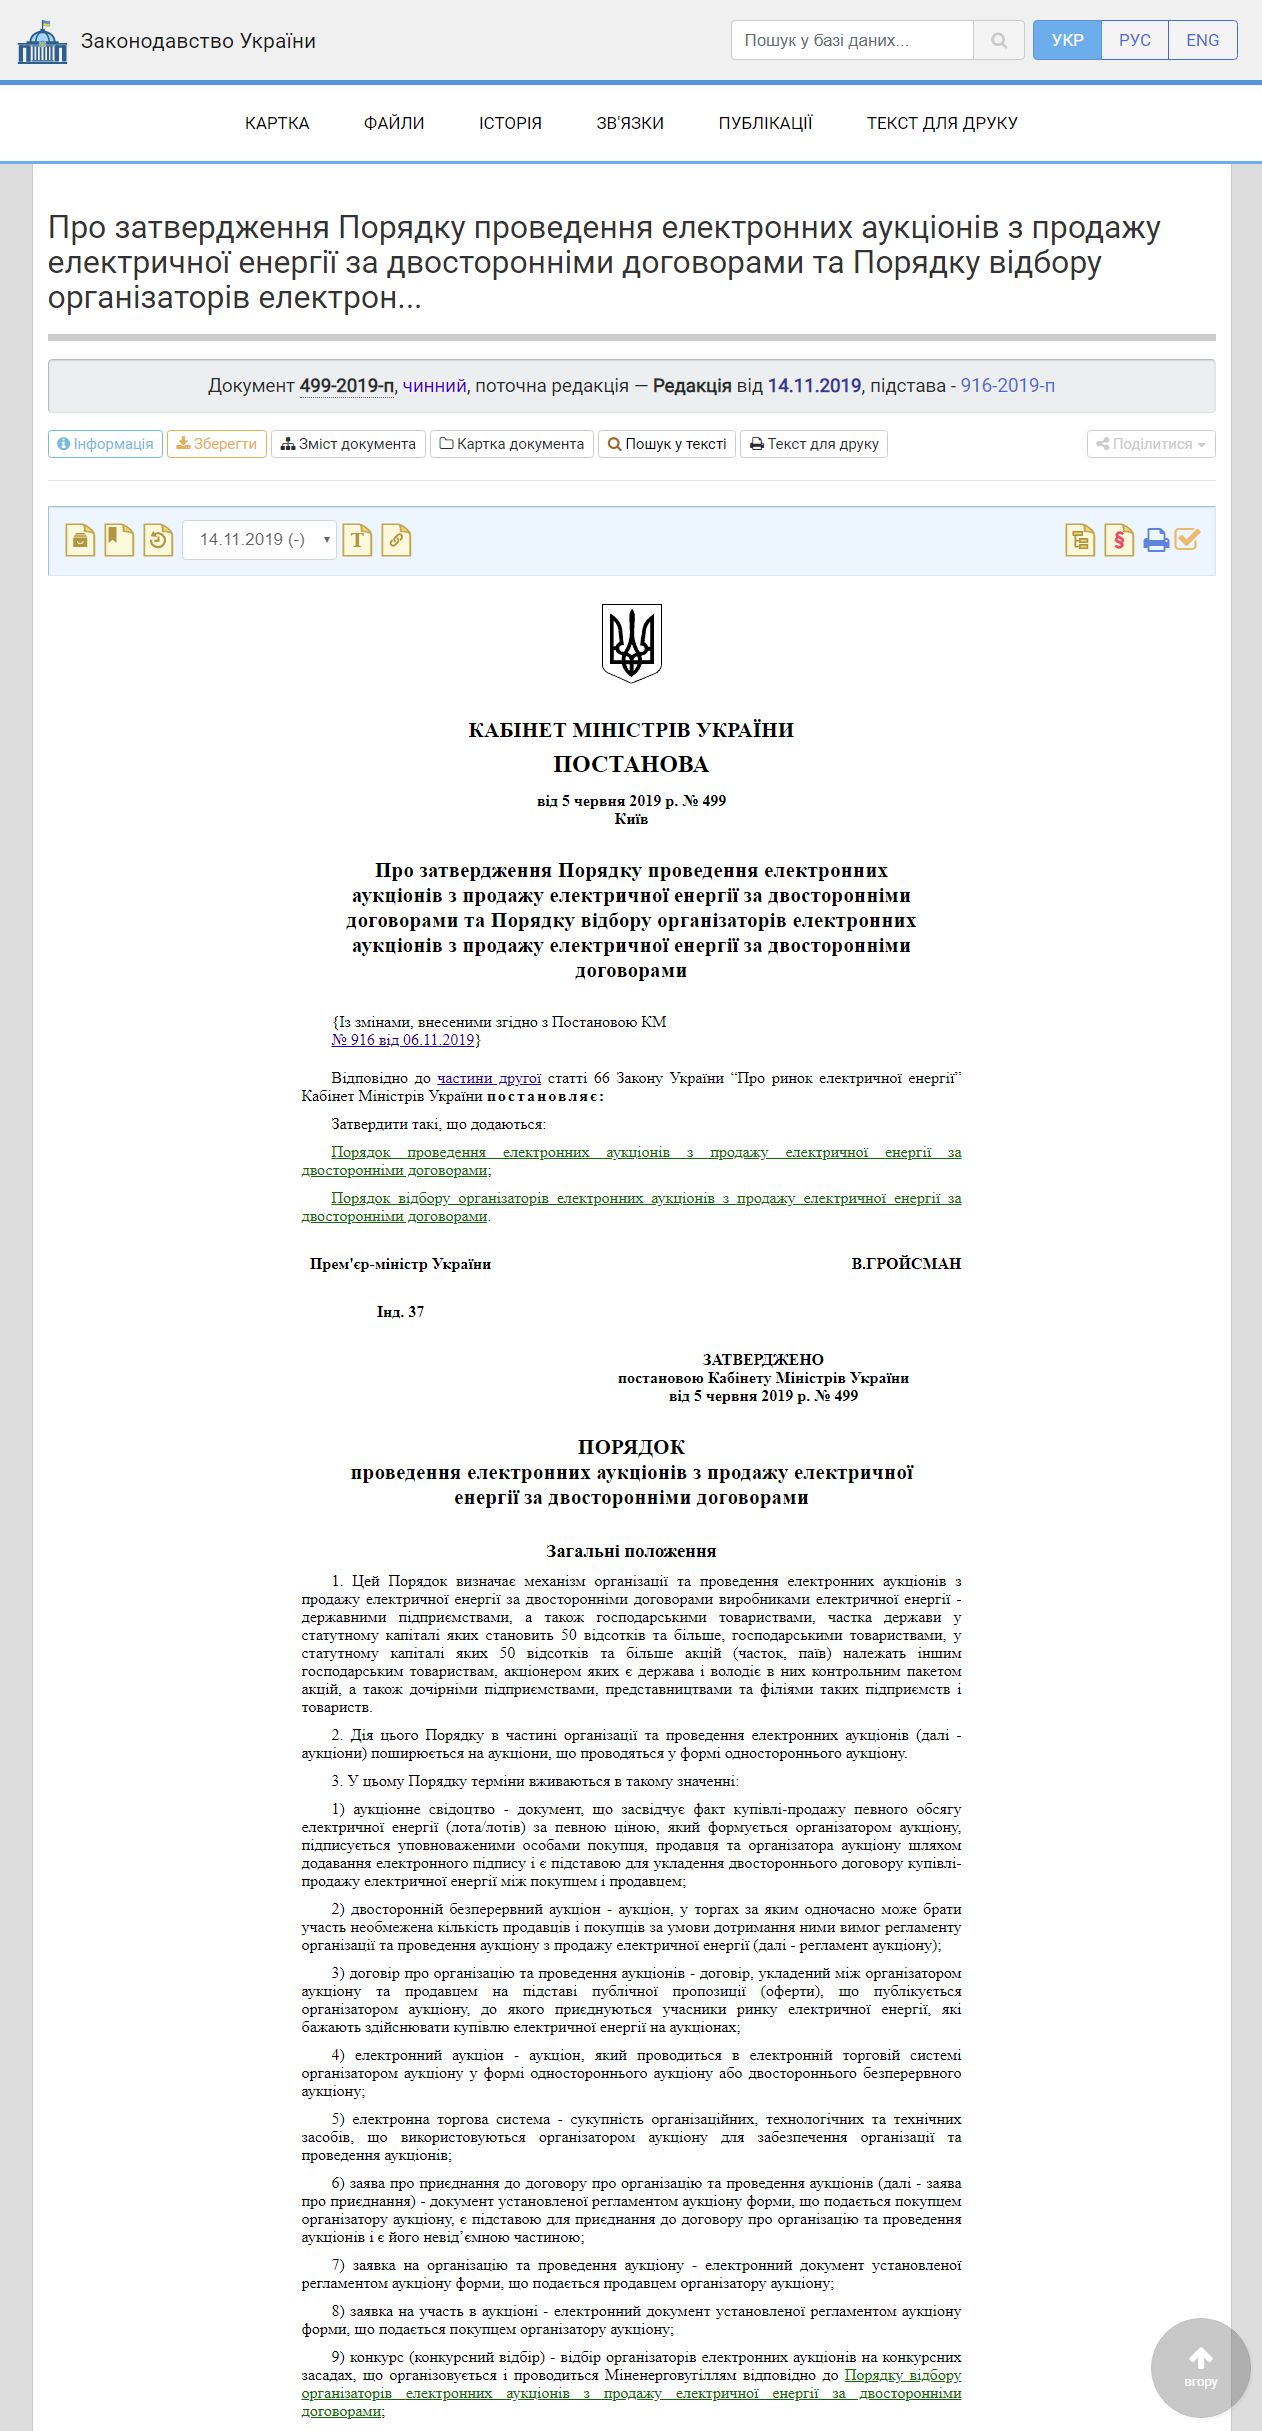 https://zakon.rada.gov.ua/laws/show/499-2019-%D0%BF